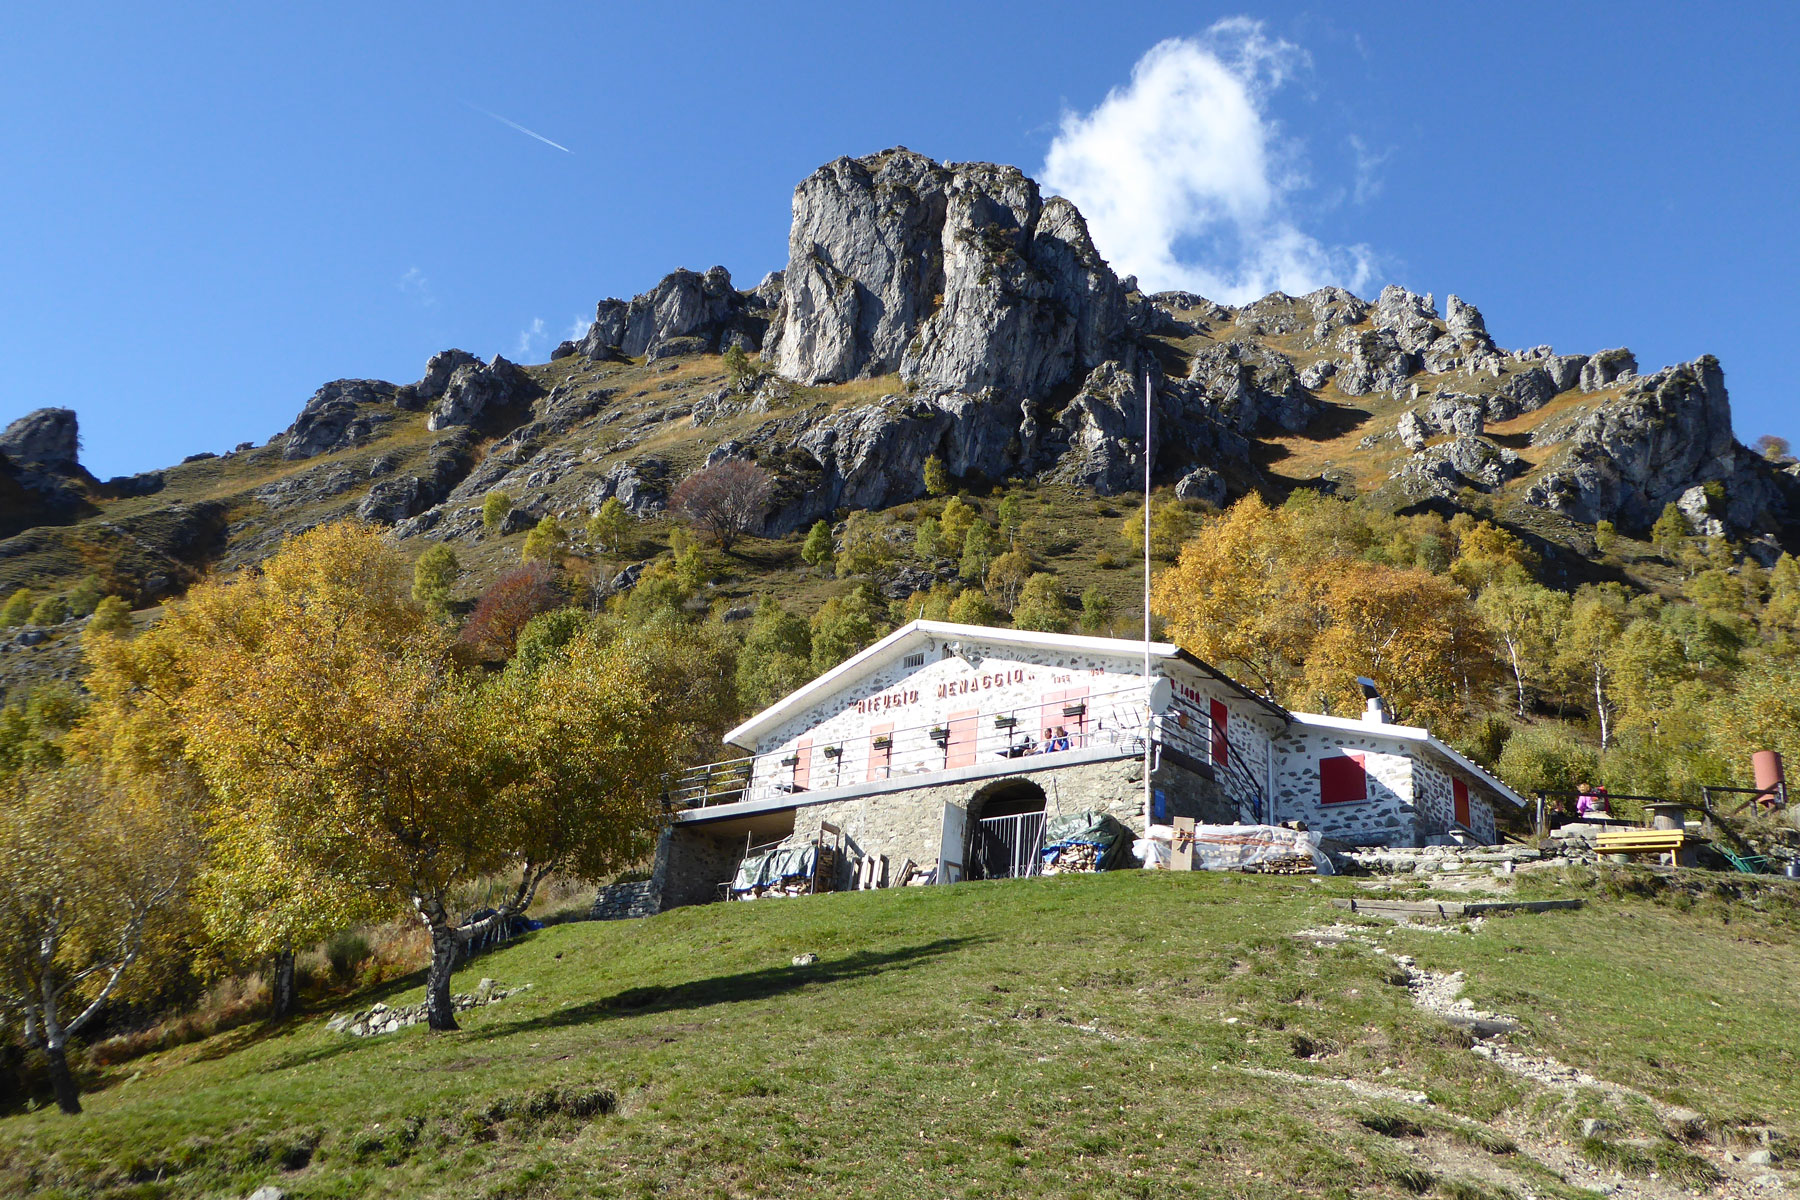 Rifugio Menaggio on the south slope of Mount Grona